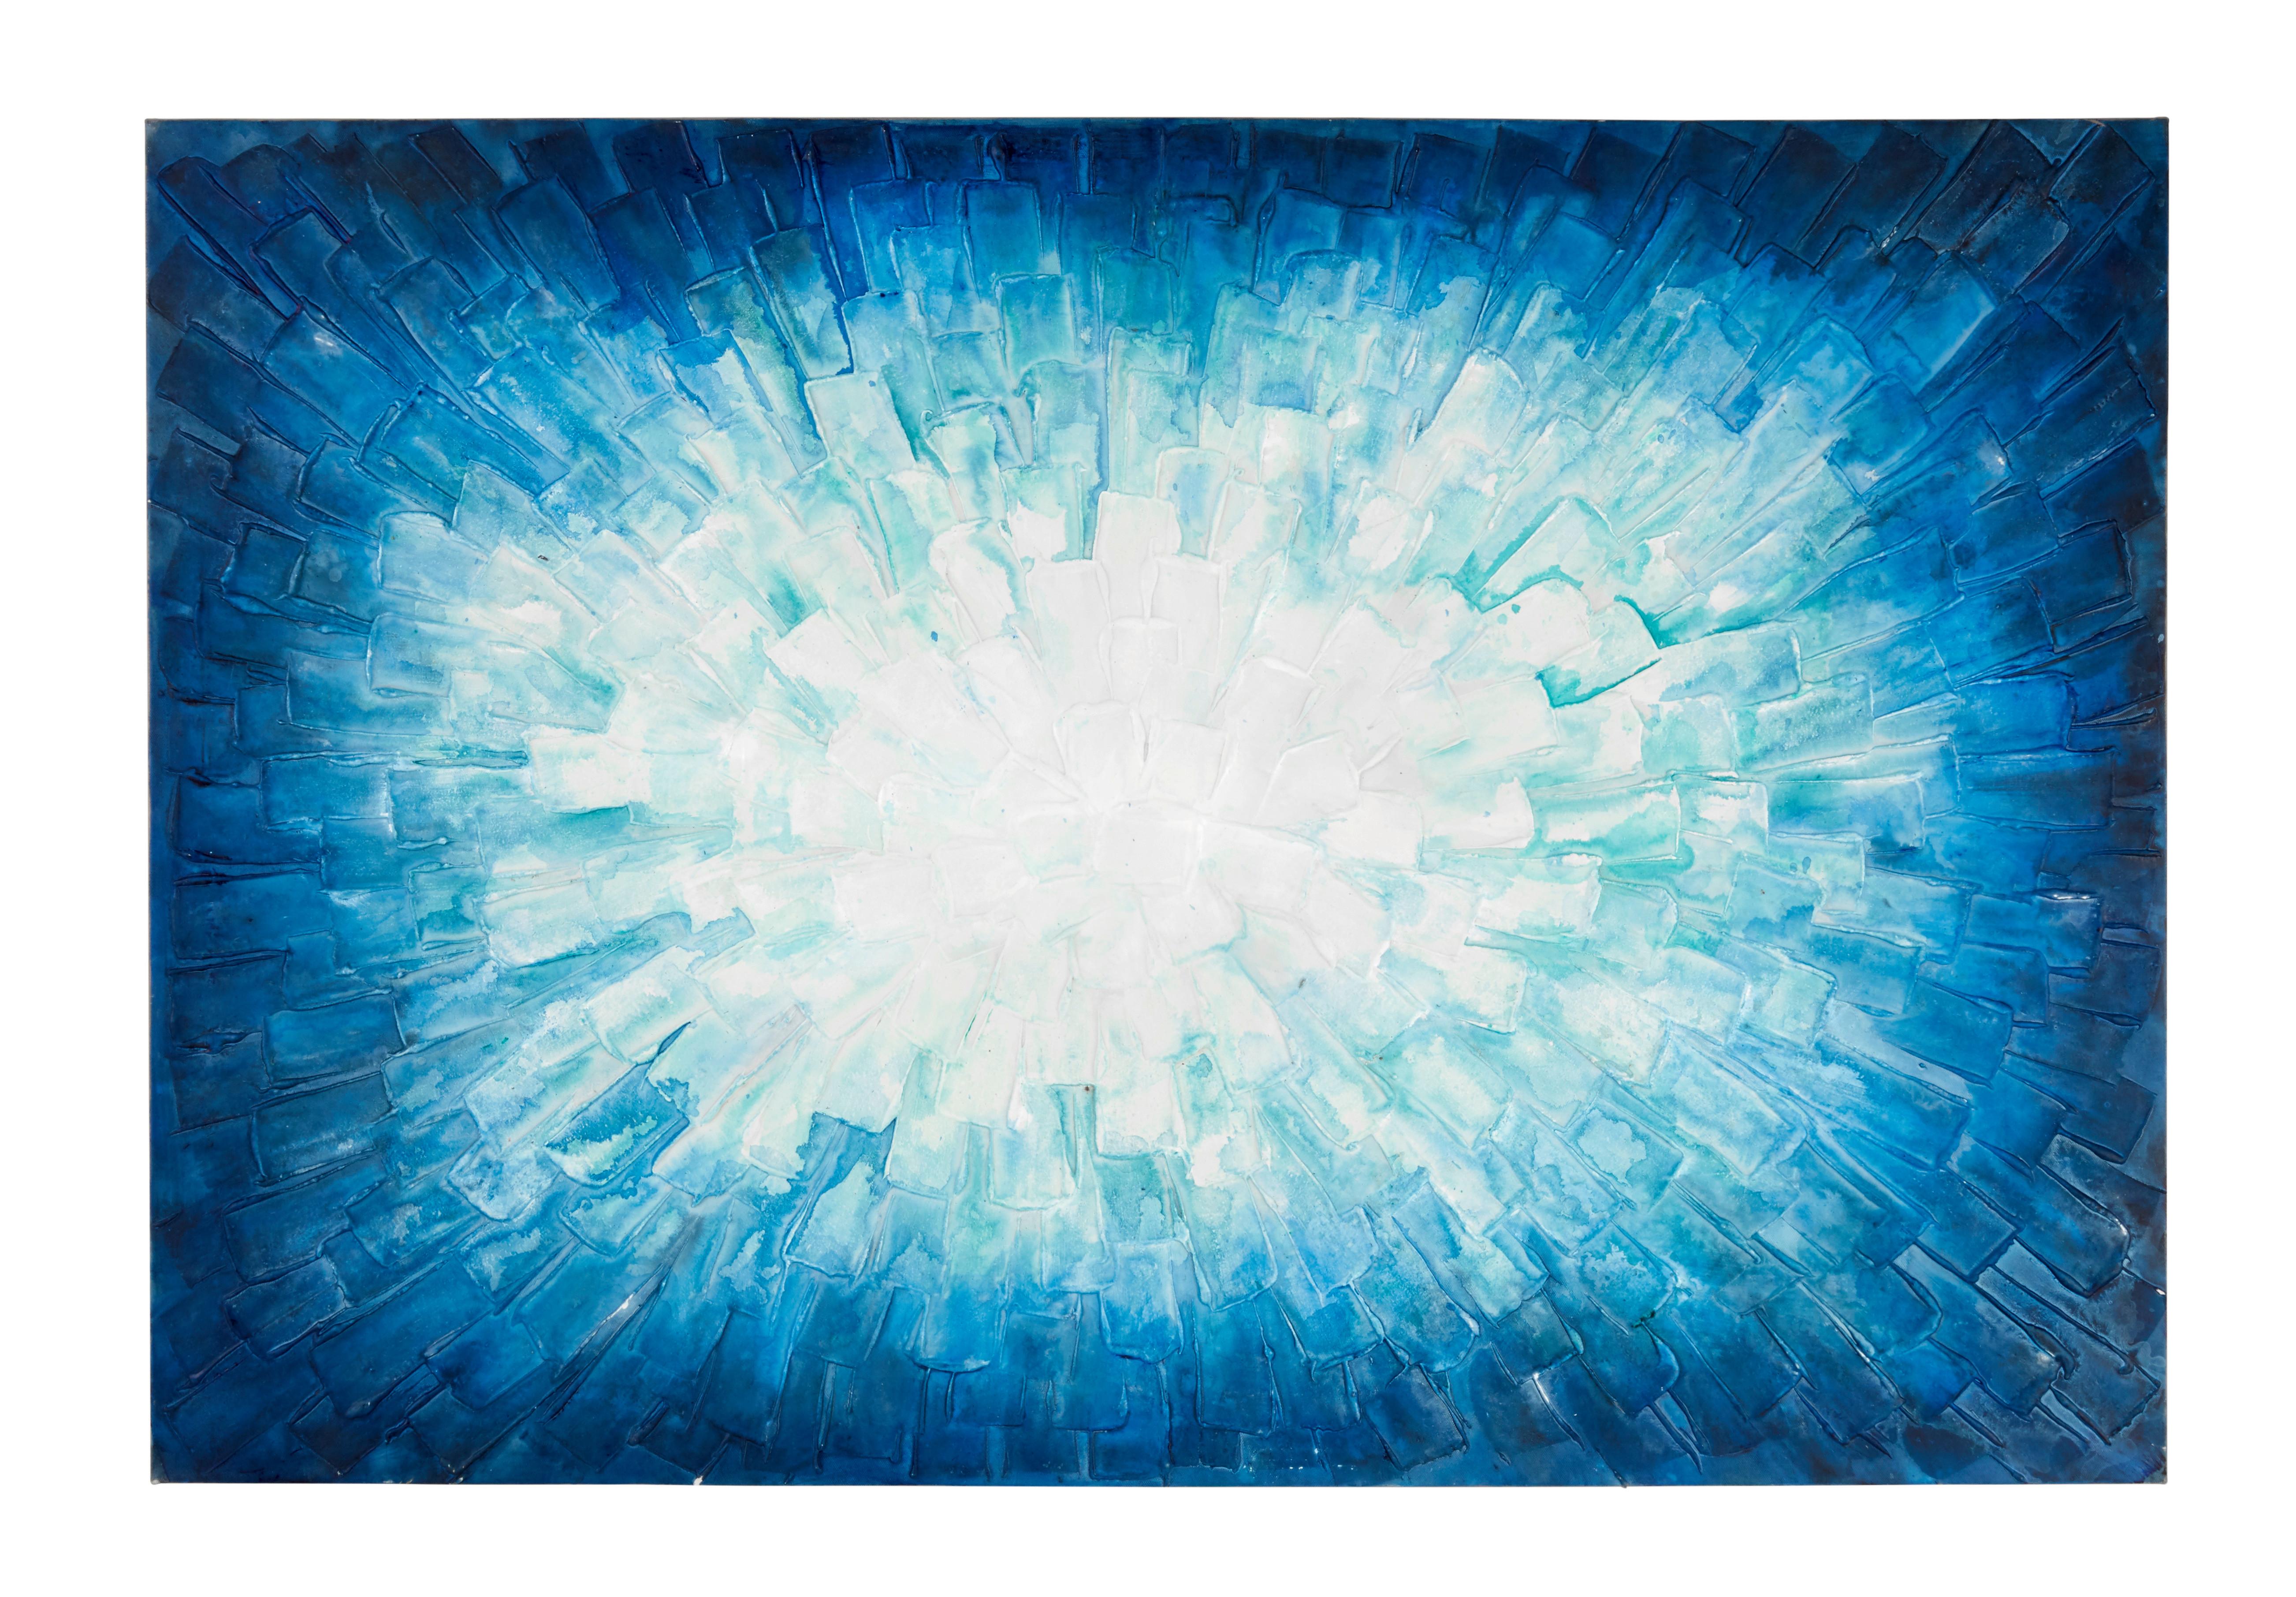 Obraz Acryl, 80/120cm - bílá/modrá, dřevo/textil (80/120cm) - Premium Living